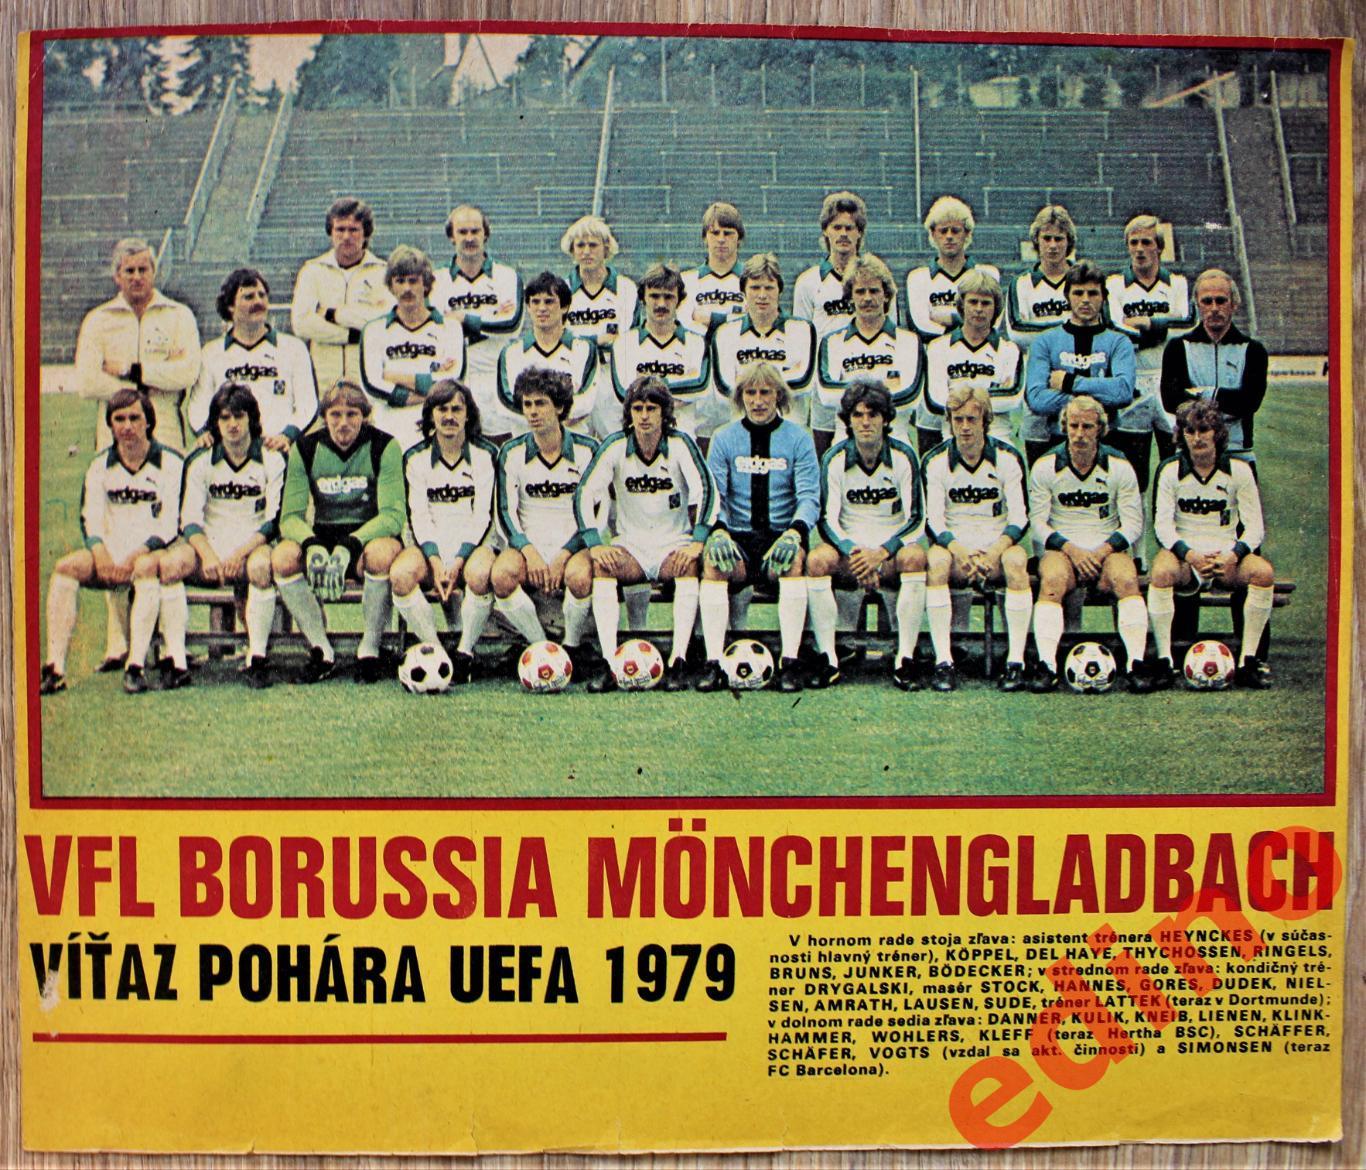 журнал Start 1979 год. Боруссия Мёнхенгладбах обладатель кубка УЕФА